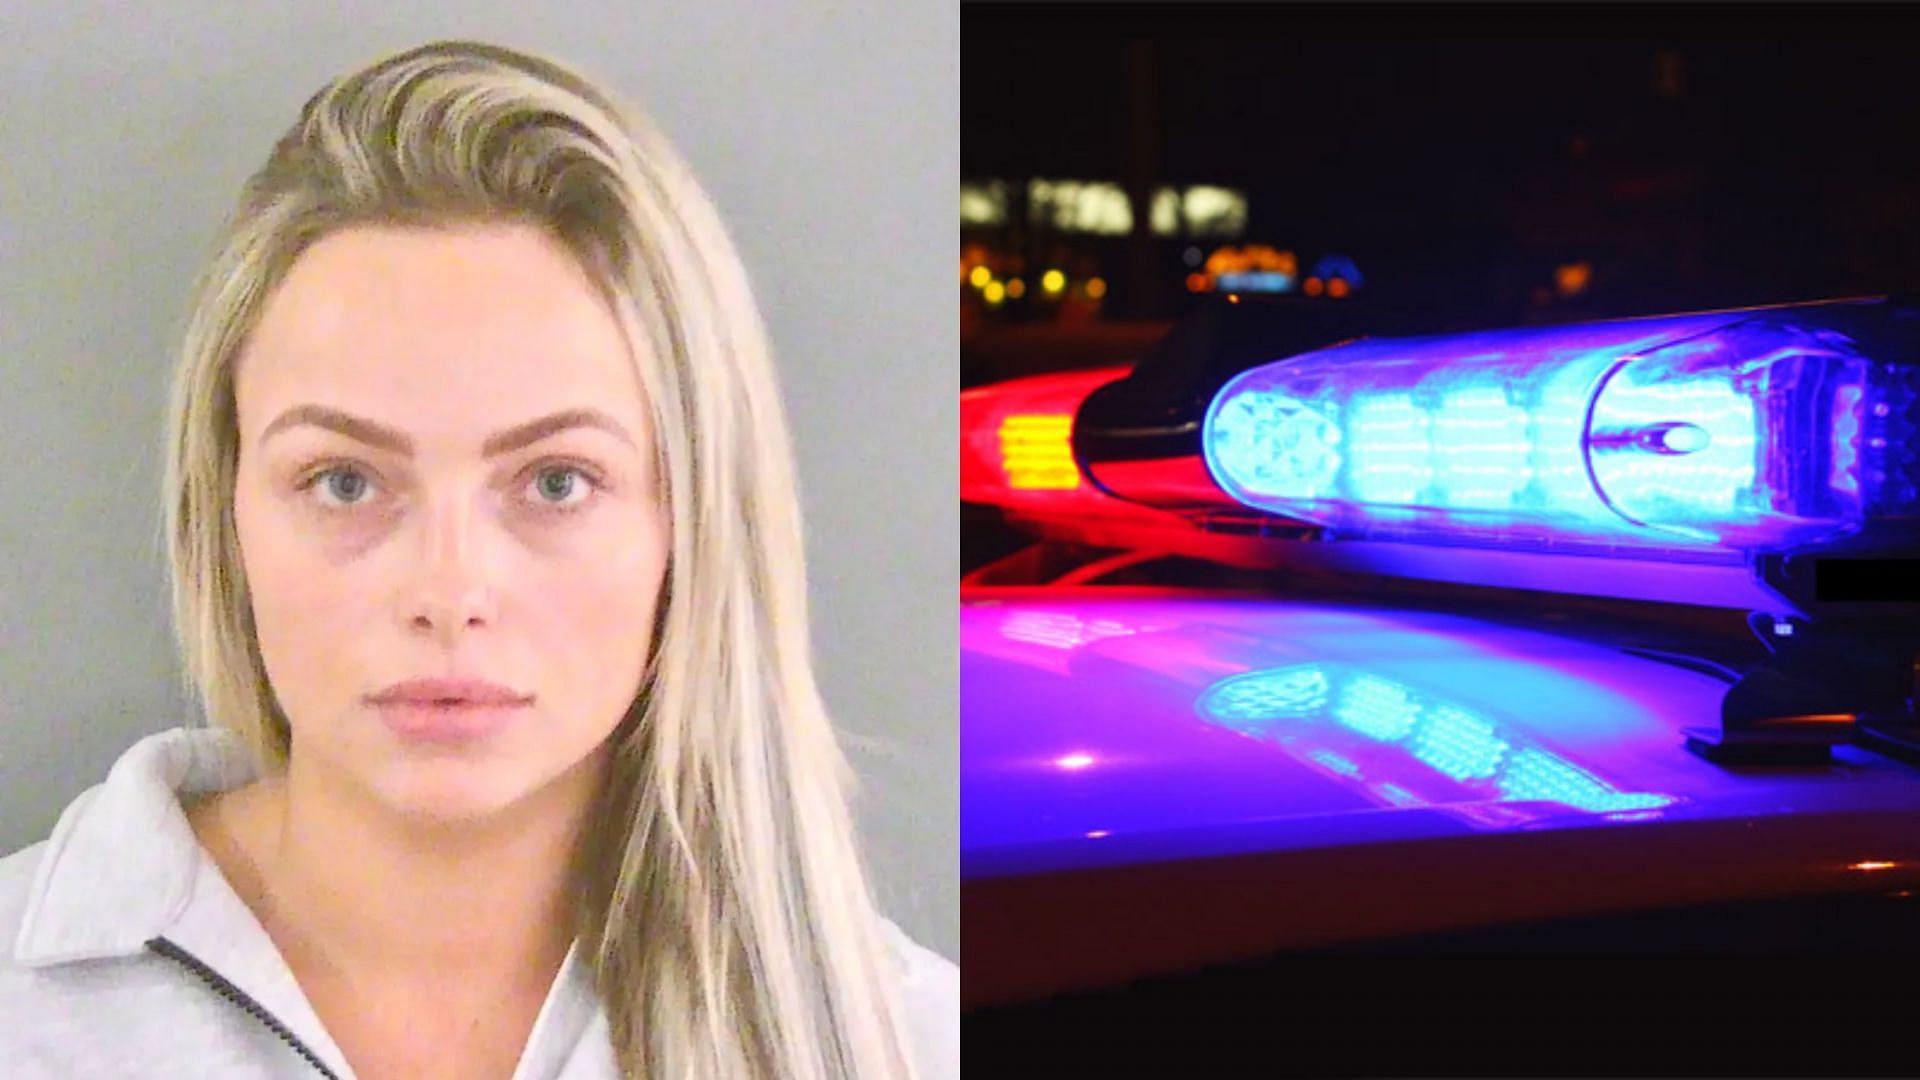 WWE Superstar Liv Morgan was arrested in Florida last week